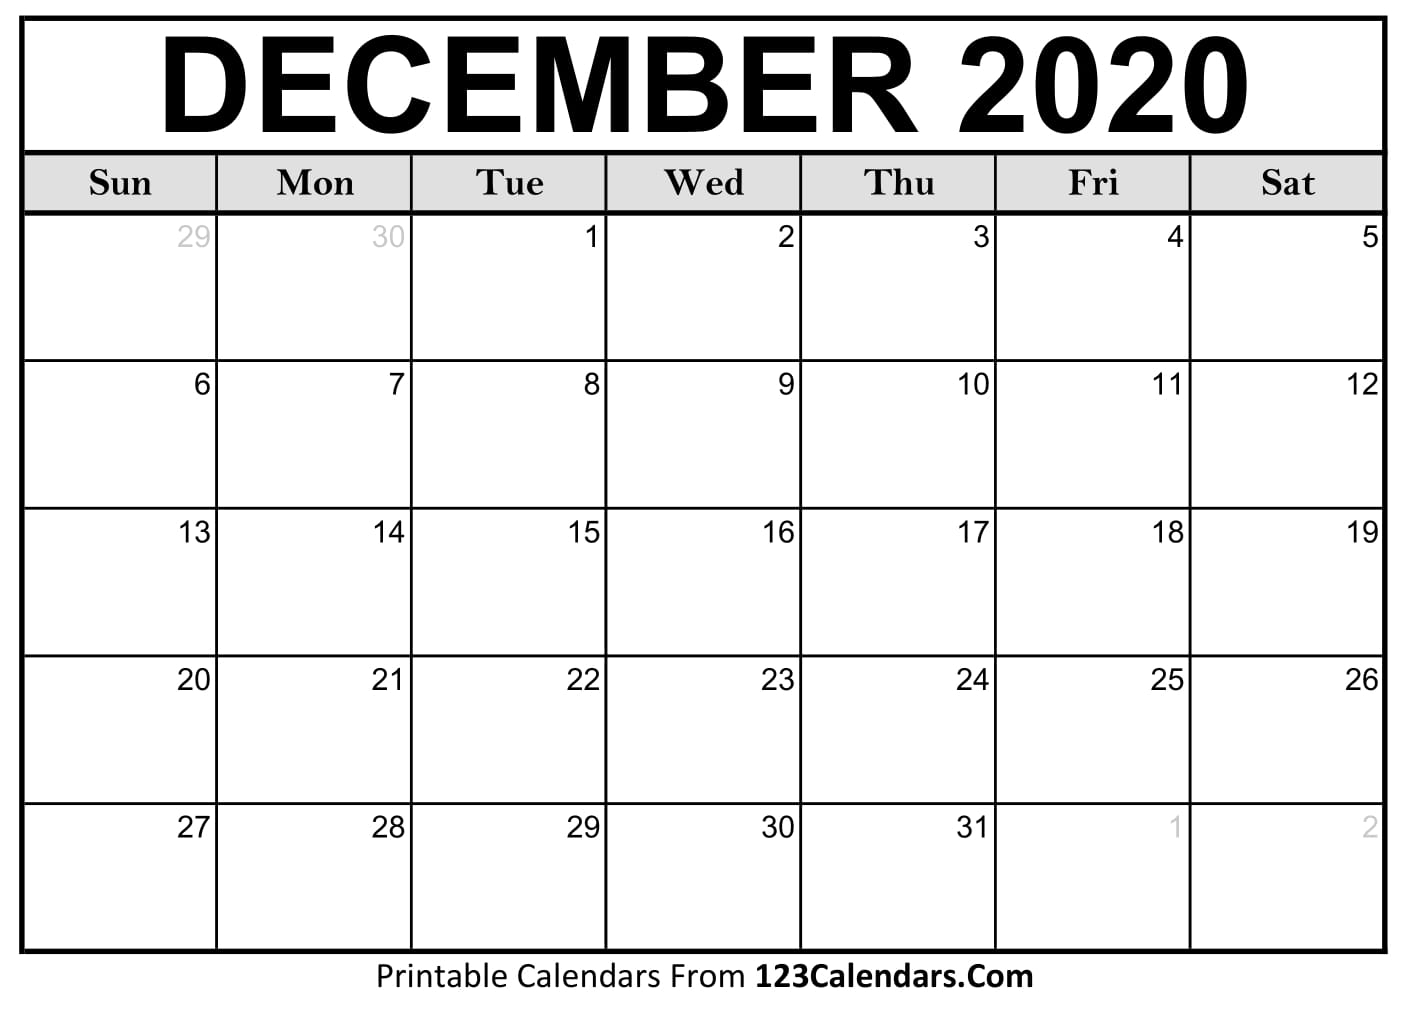 Printable December 2020 Calendar Templates | 123Calendars